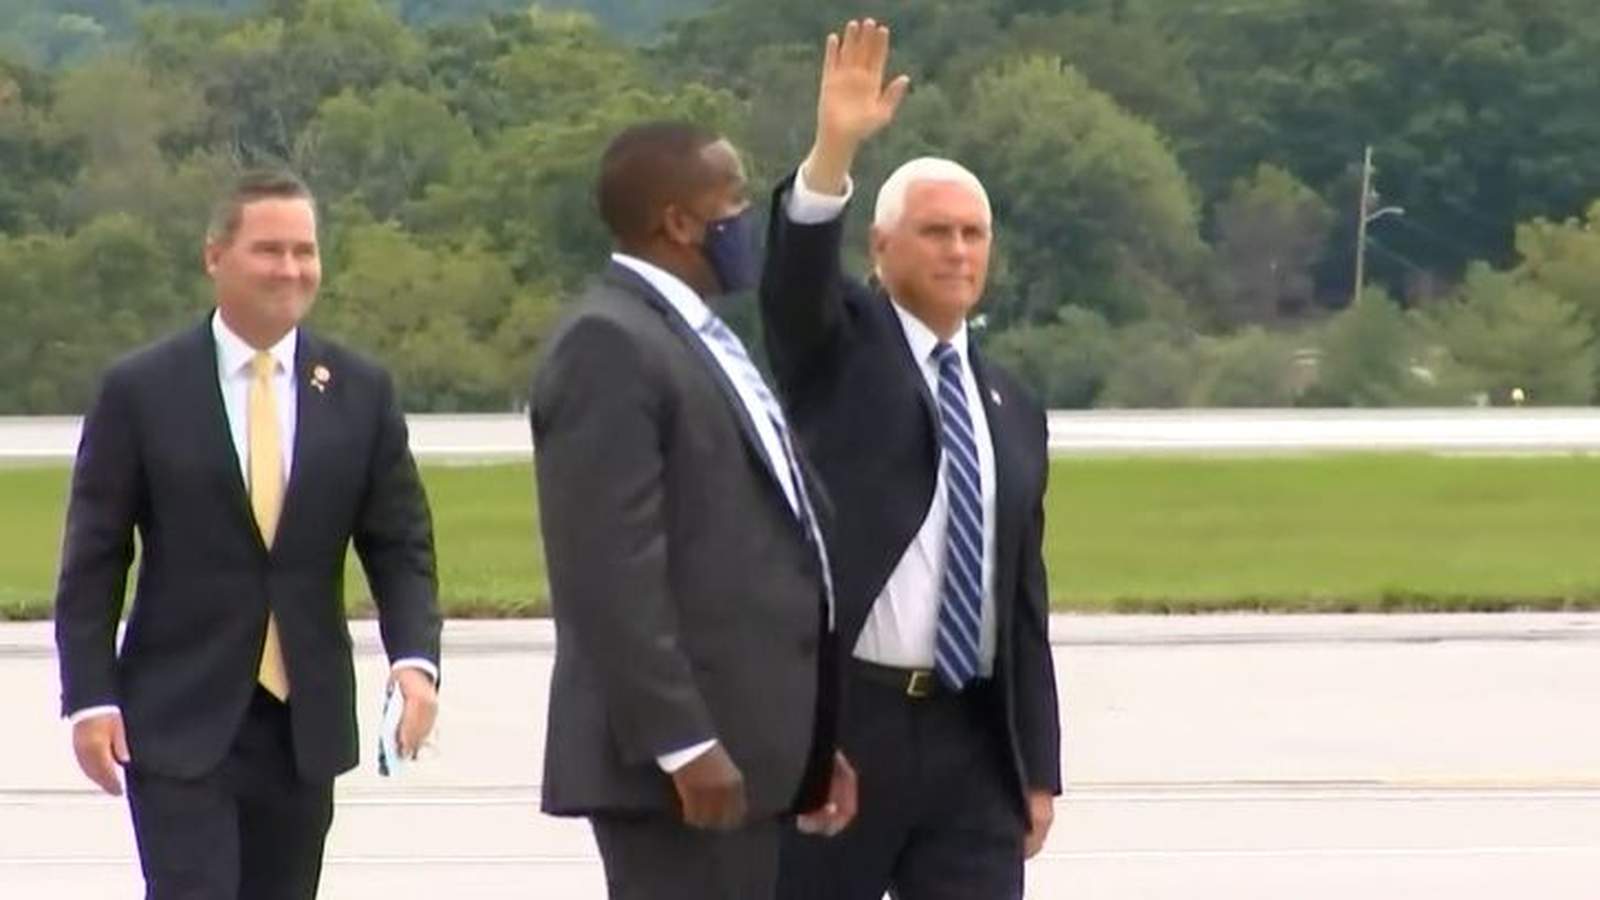 WATCH: Vice President Mike Pence lands in Roanoke before speaking at VMI